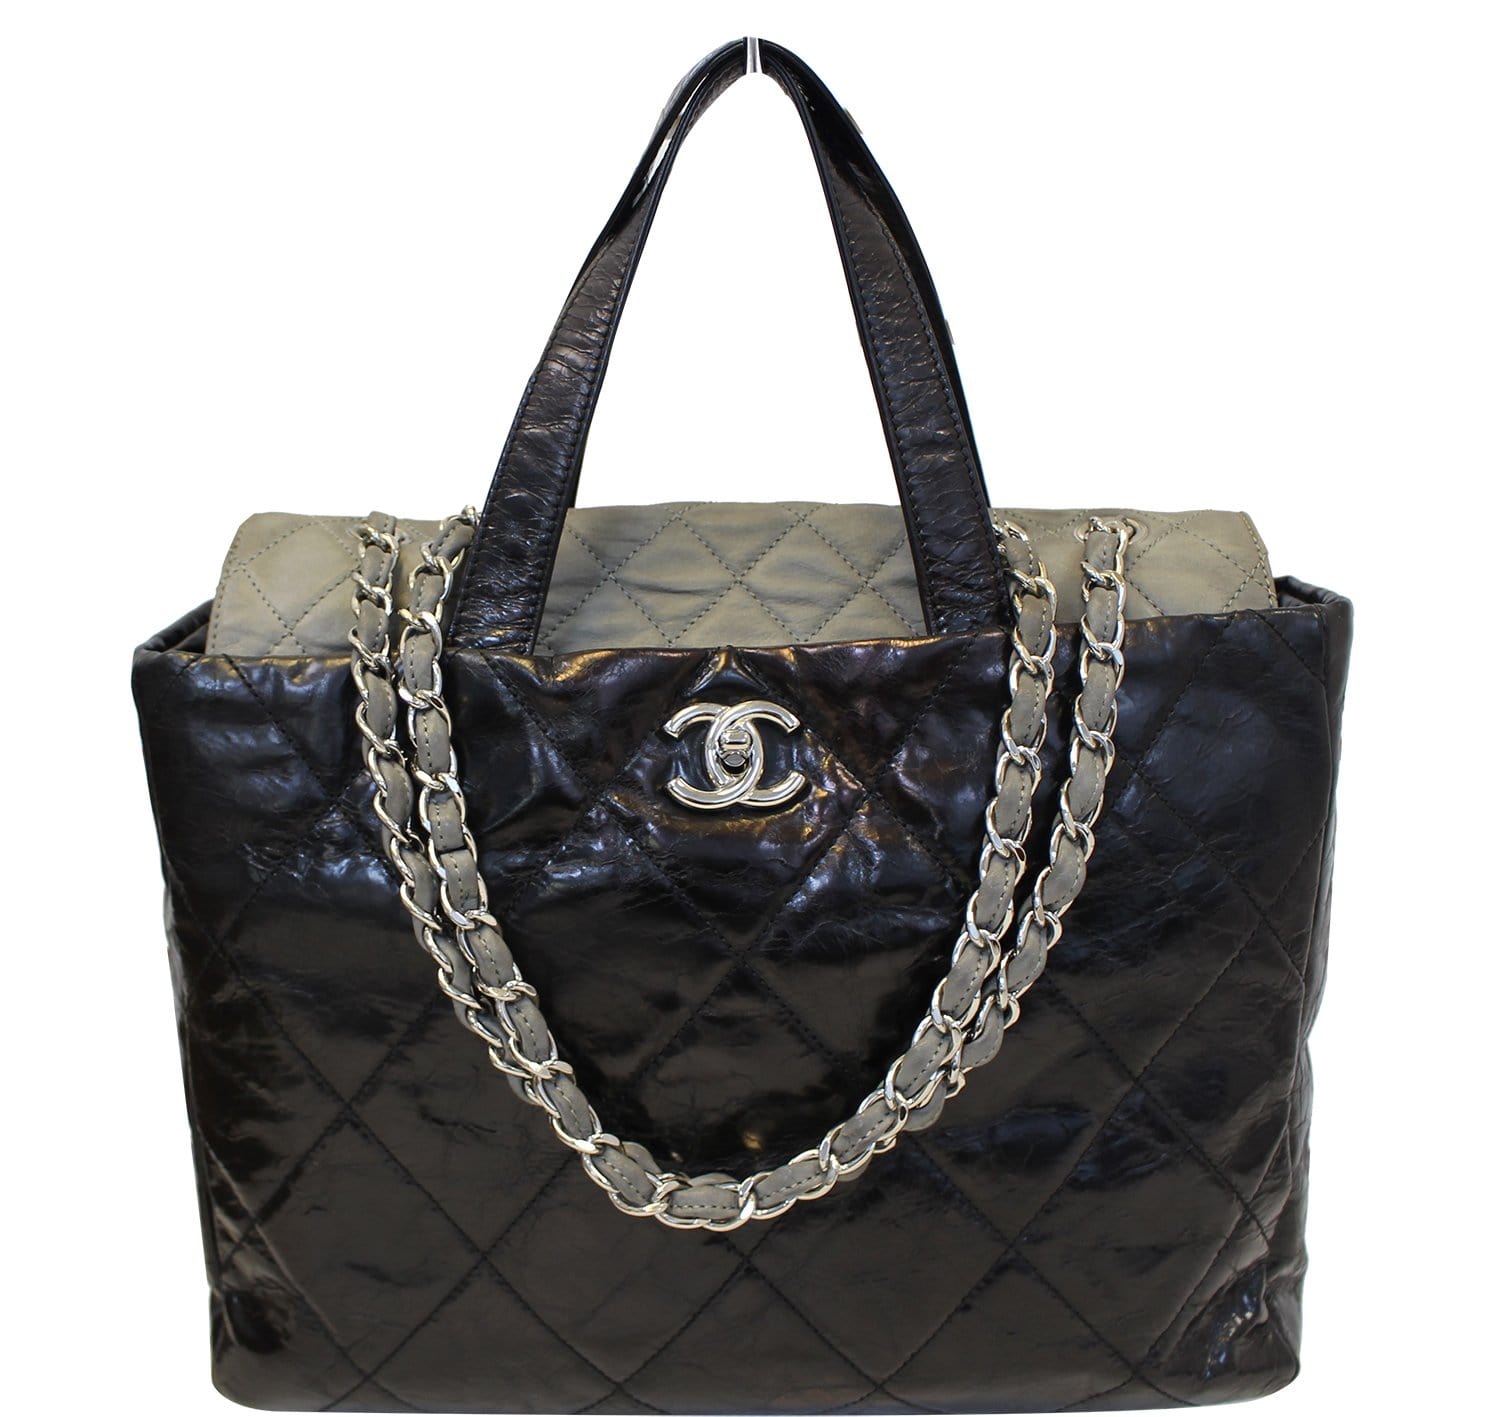 Chanel CHANEL bag matelasse lady's tote handbag 2way leather black